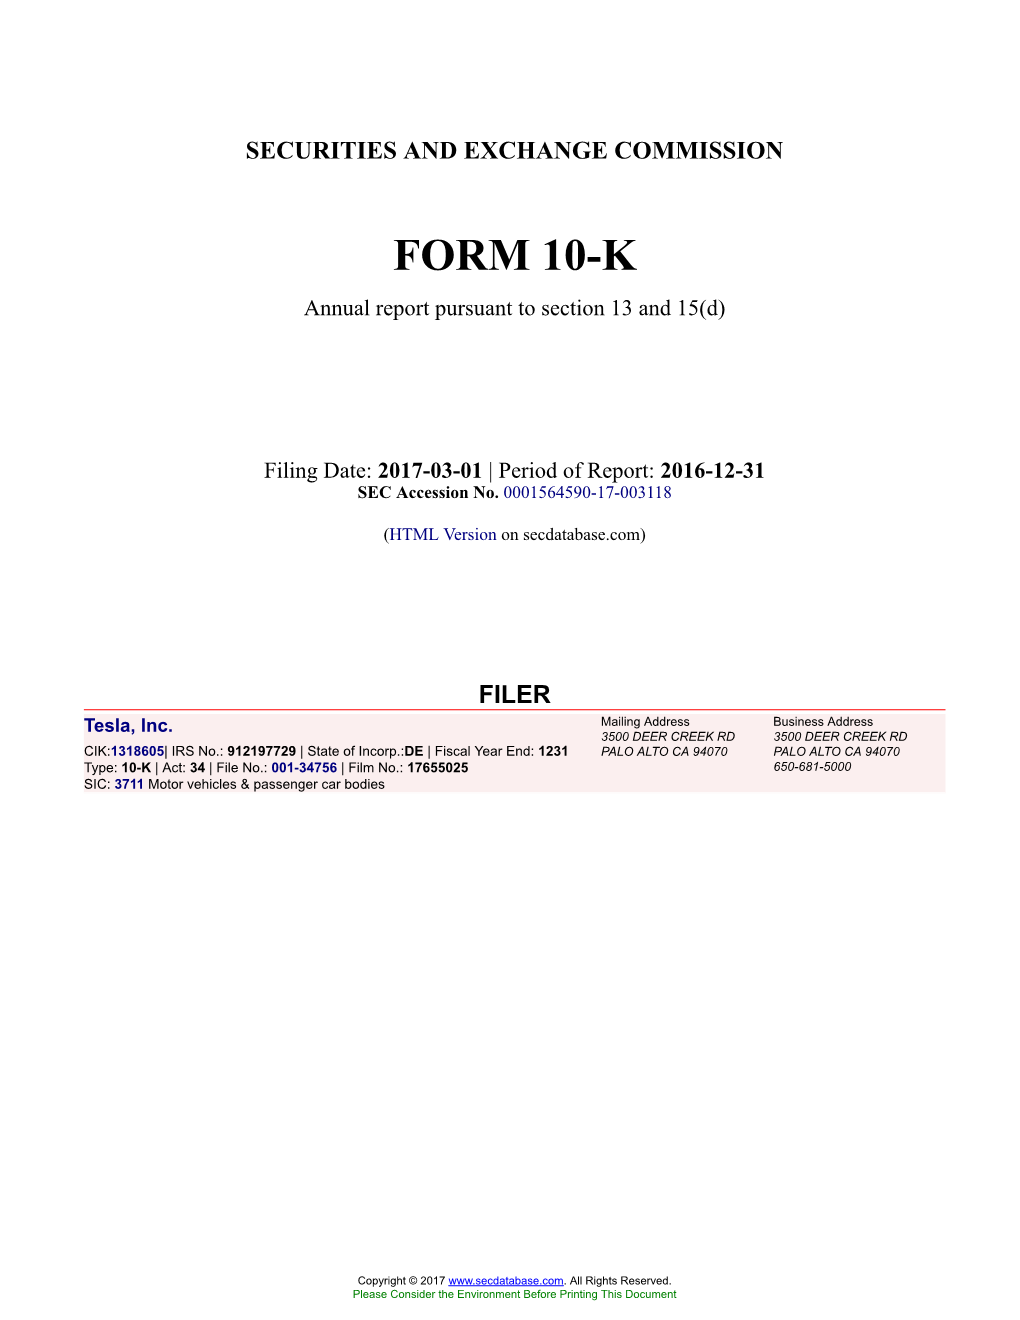 Tesla, Inc. Form 10-K Annual Report Filed 2017-03-01